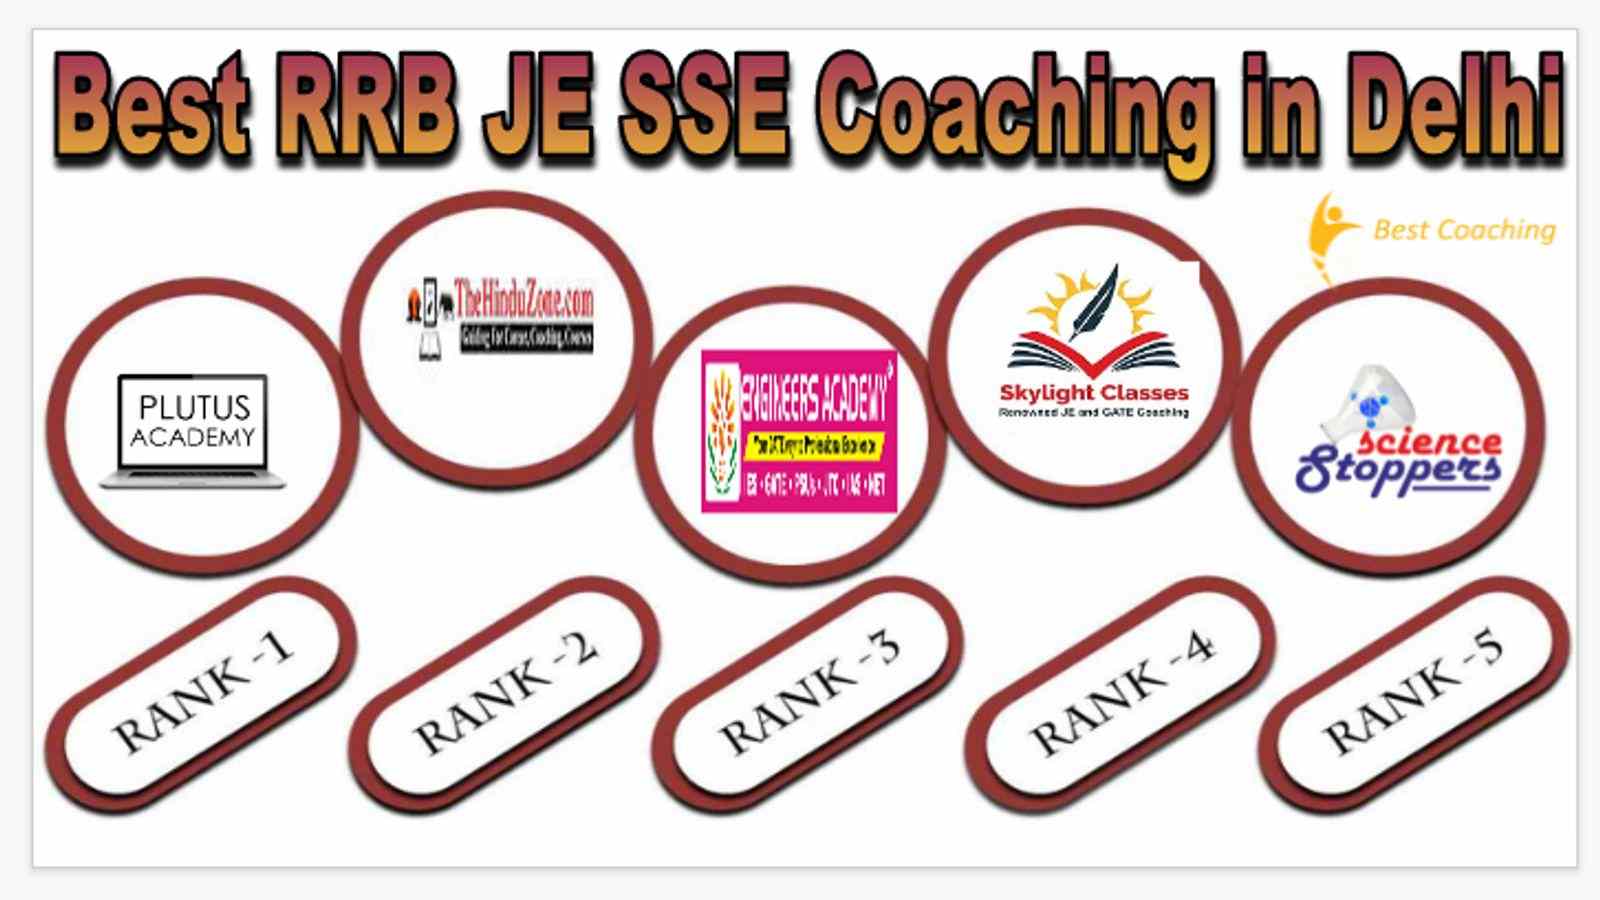 Best RRB JE SSE Coaching in Delhi